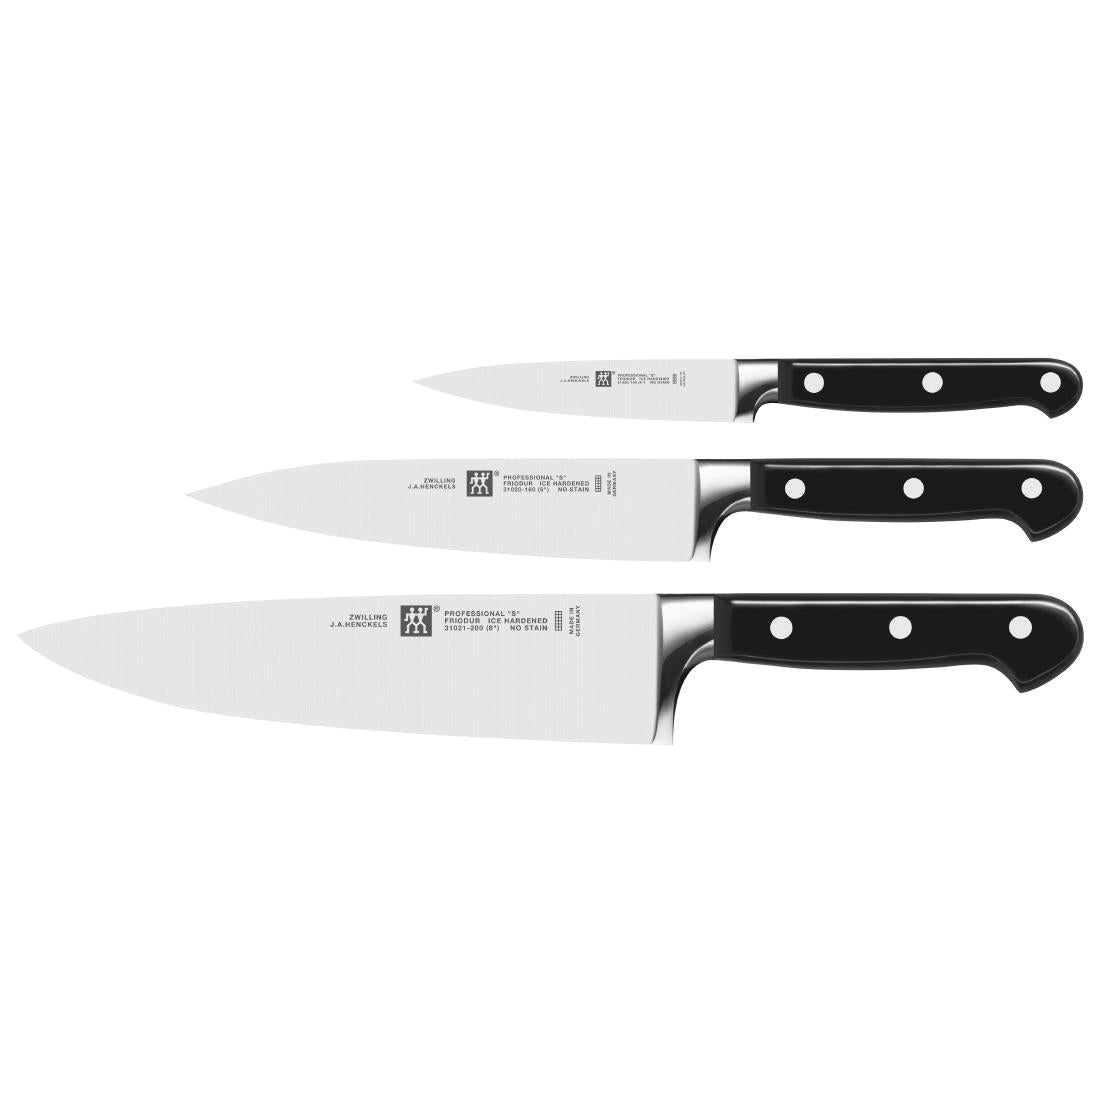 Zwilling Professional Knife Set 10cm Paring Knife,16cm Carving Knife & 20cm Chef's Knife (Pack 3)